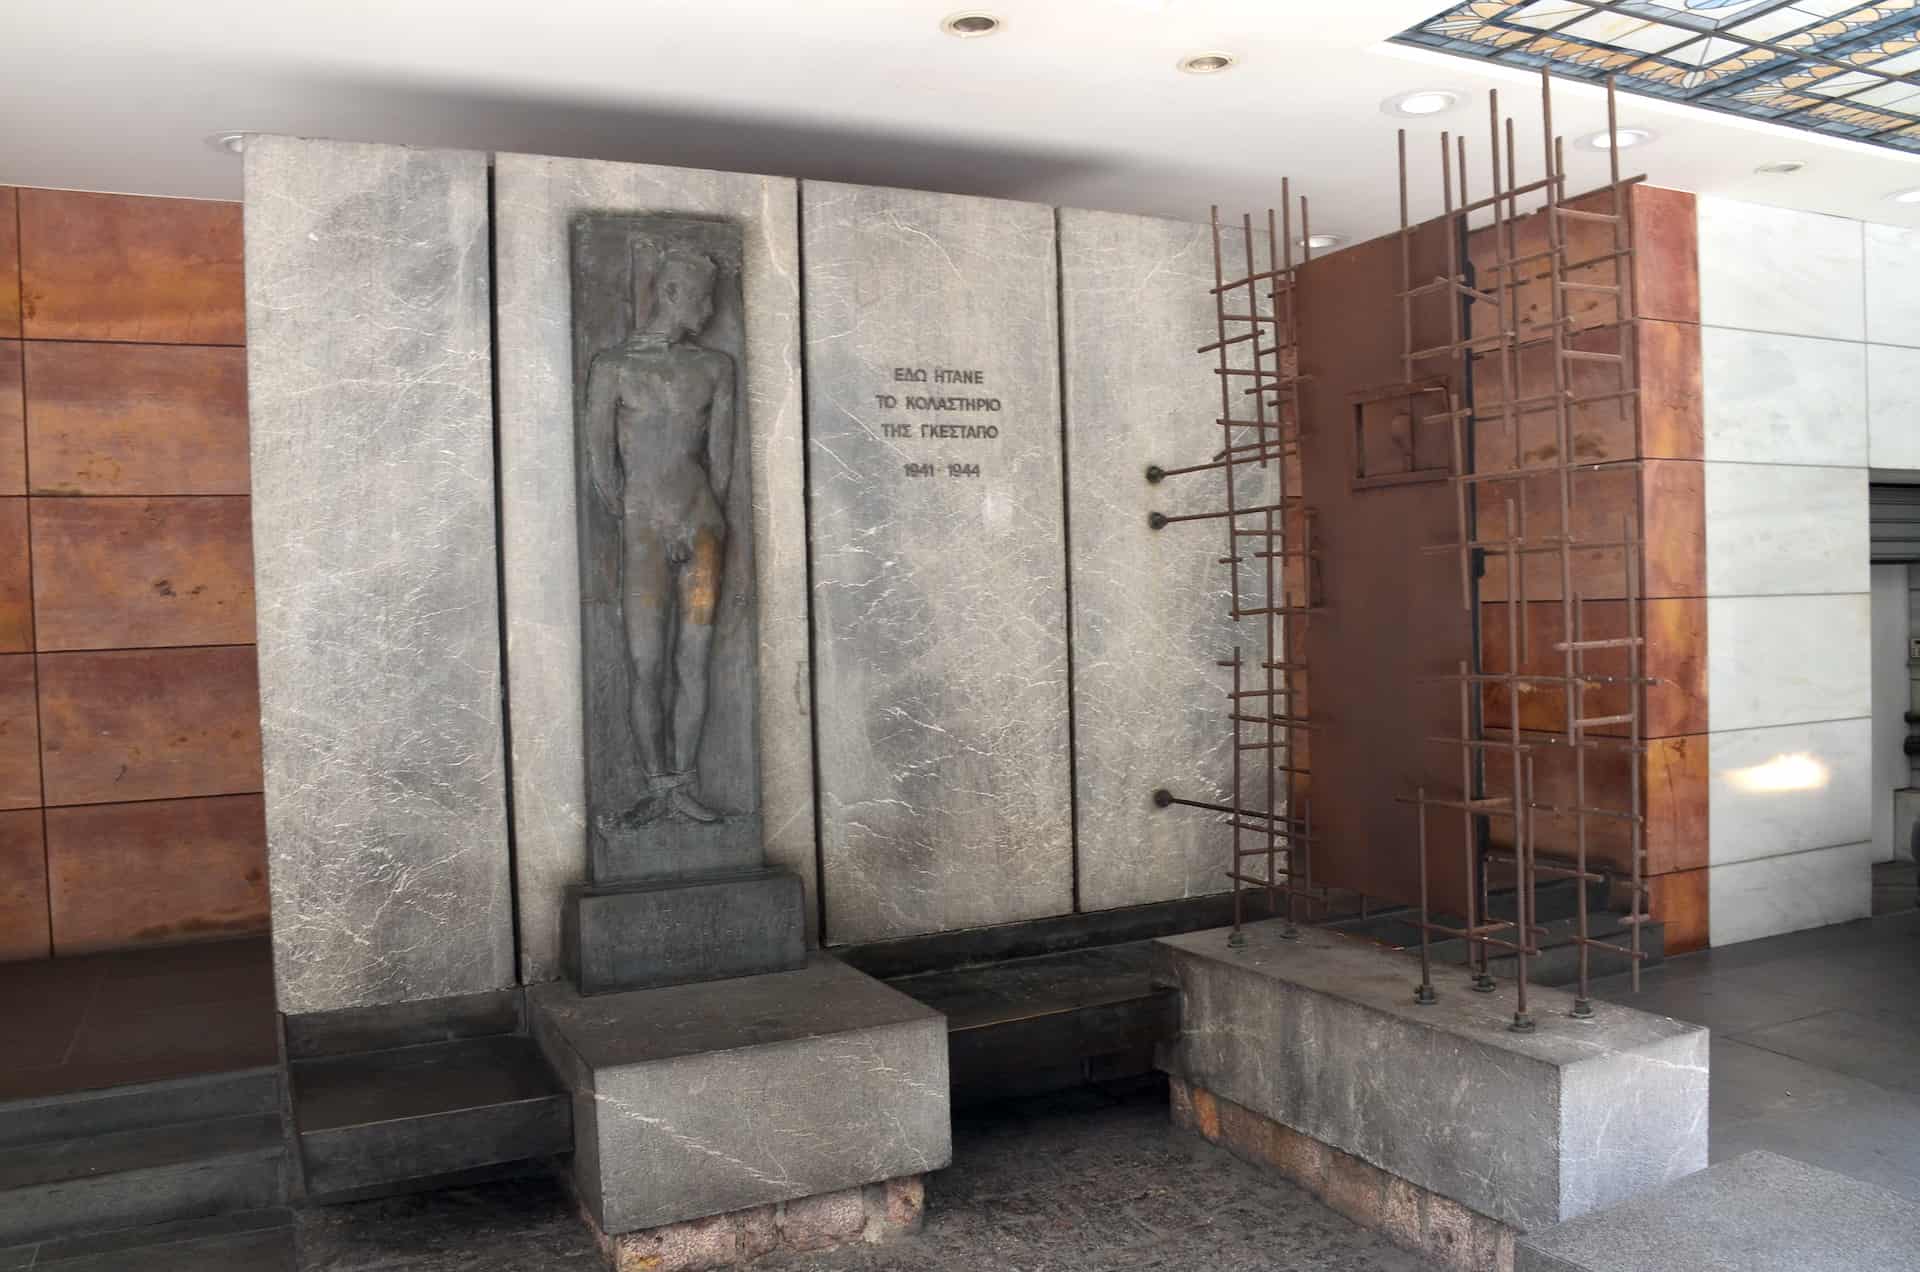 Gestapo Interrogation Memorial in Kolonaki, Athens, Greece